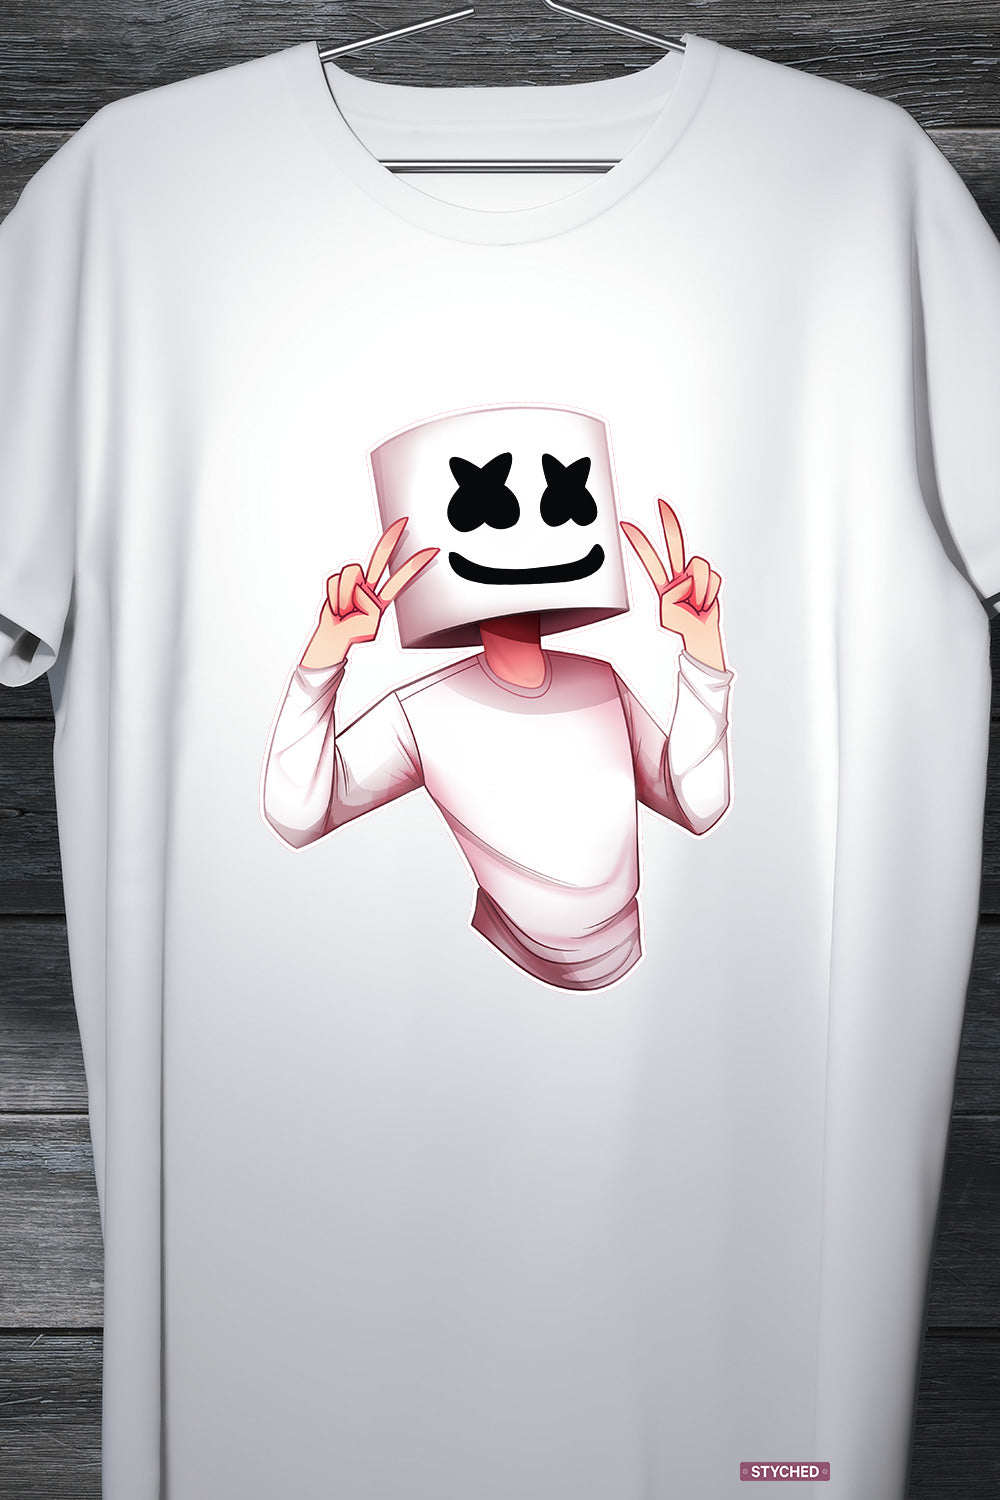 Marshmello Swag - Graphic Printed Tee on White Shirt